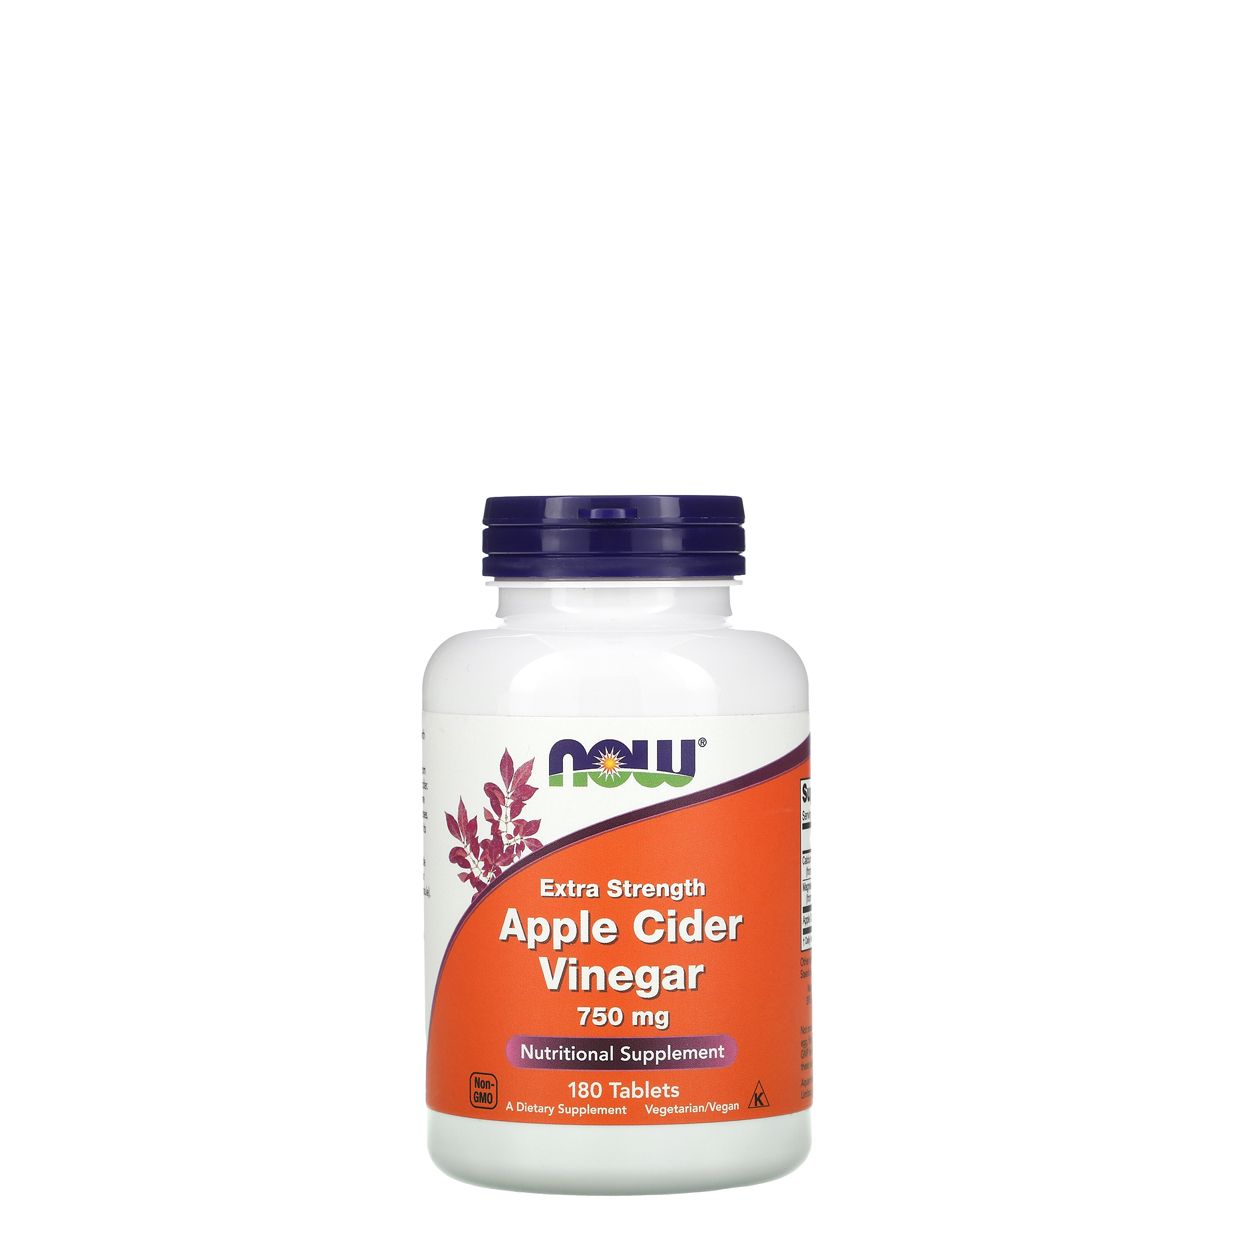 Extra dózisú almaecet 750 mg, Now Extra Strength Apple Cider Vinegar, 180 tabletta